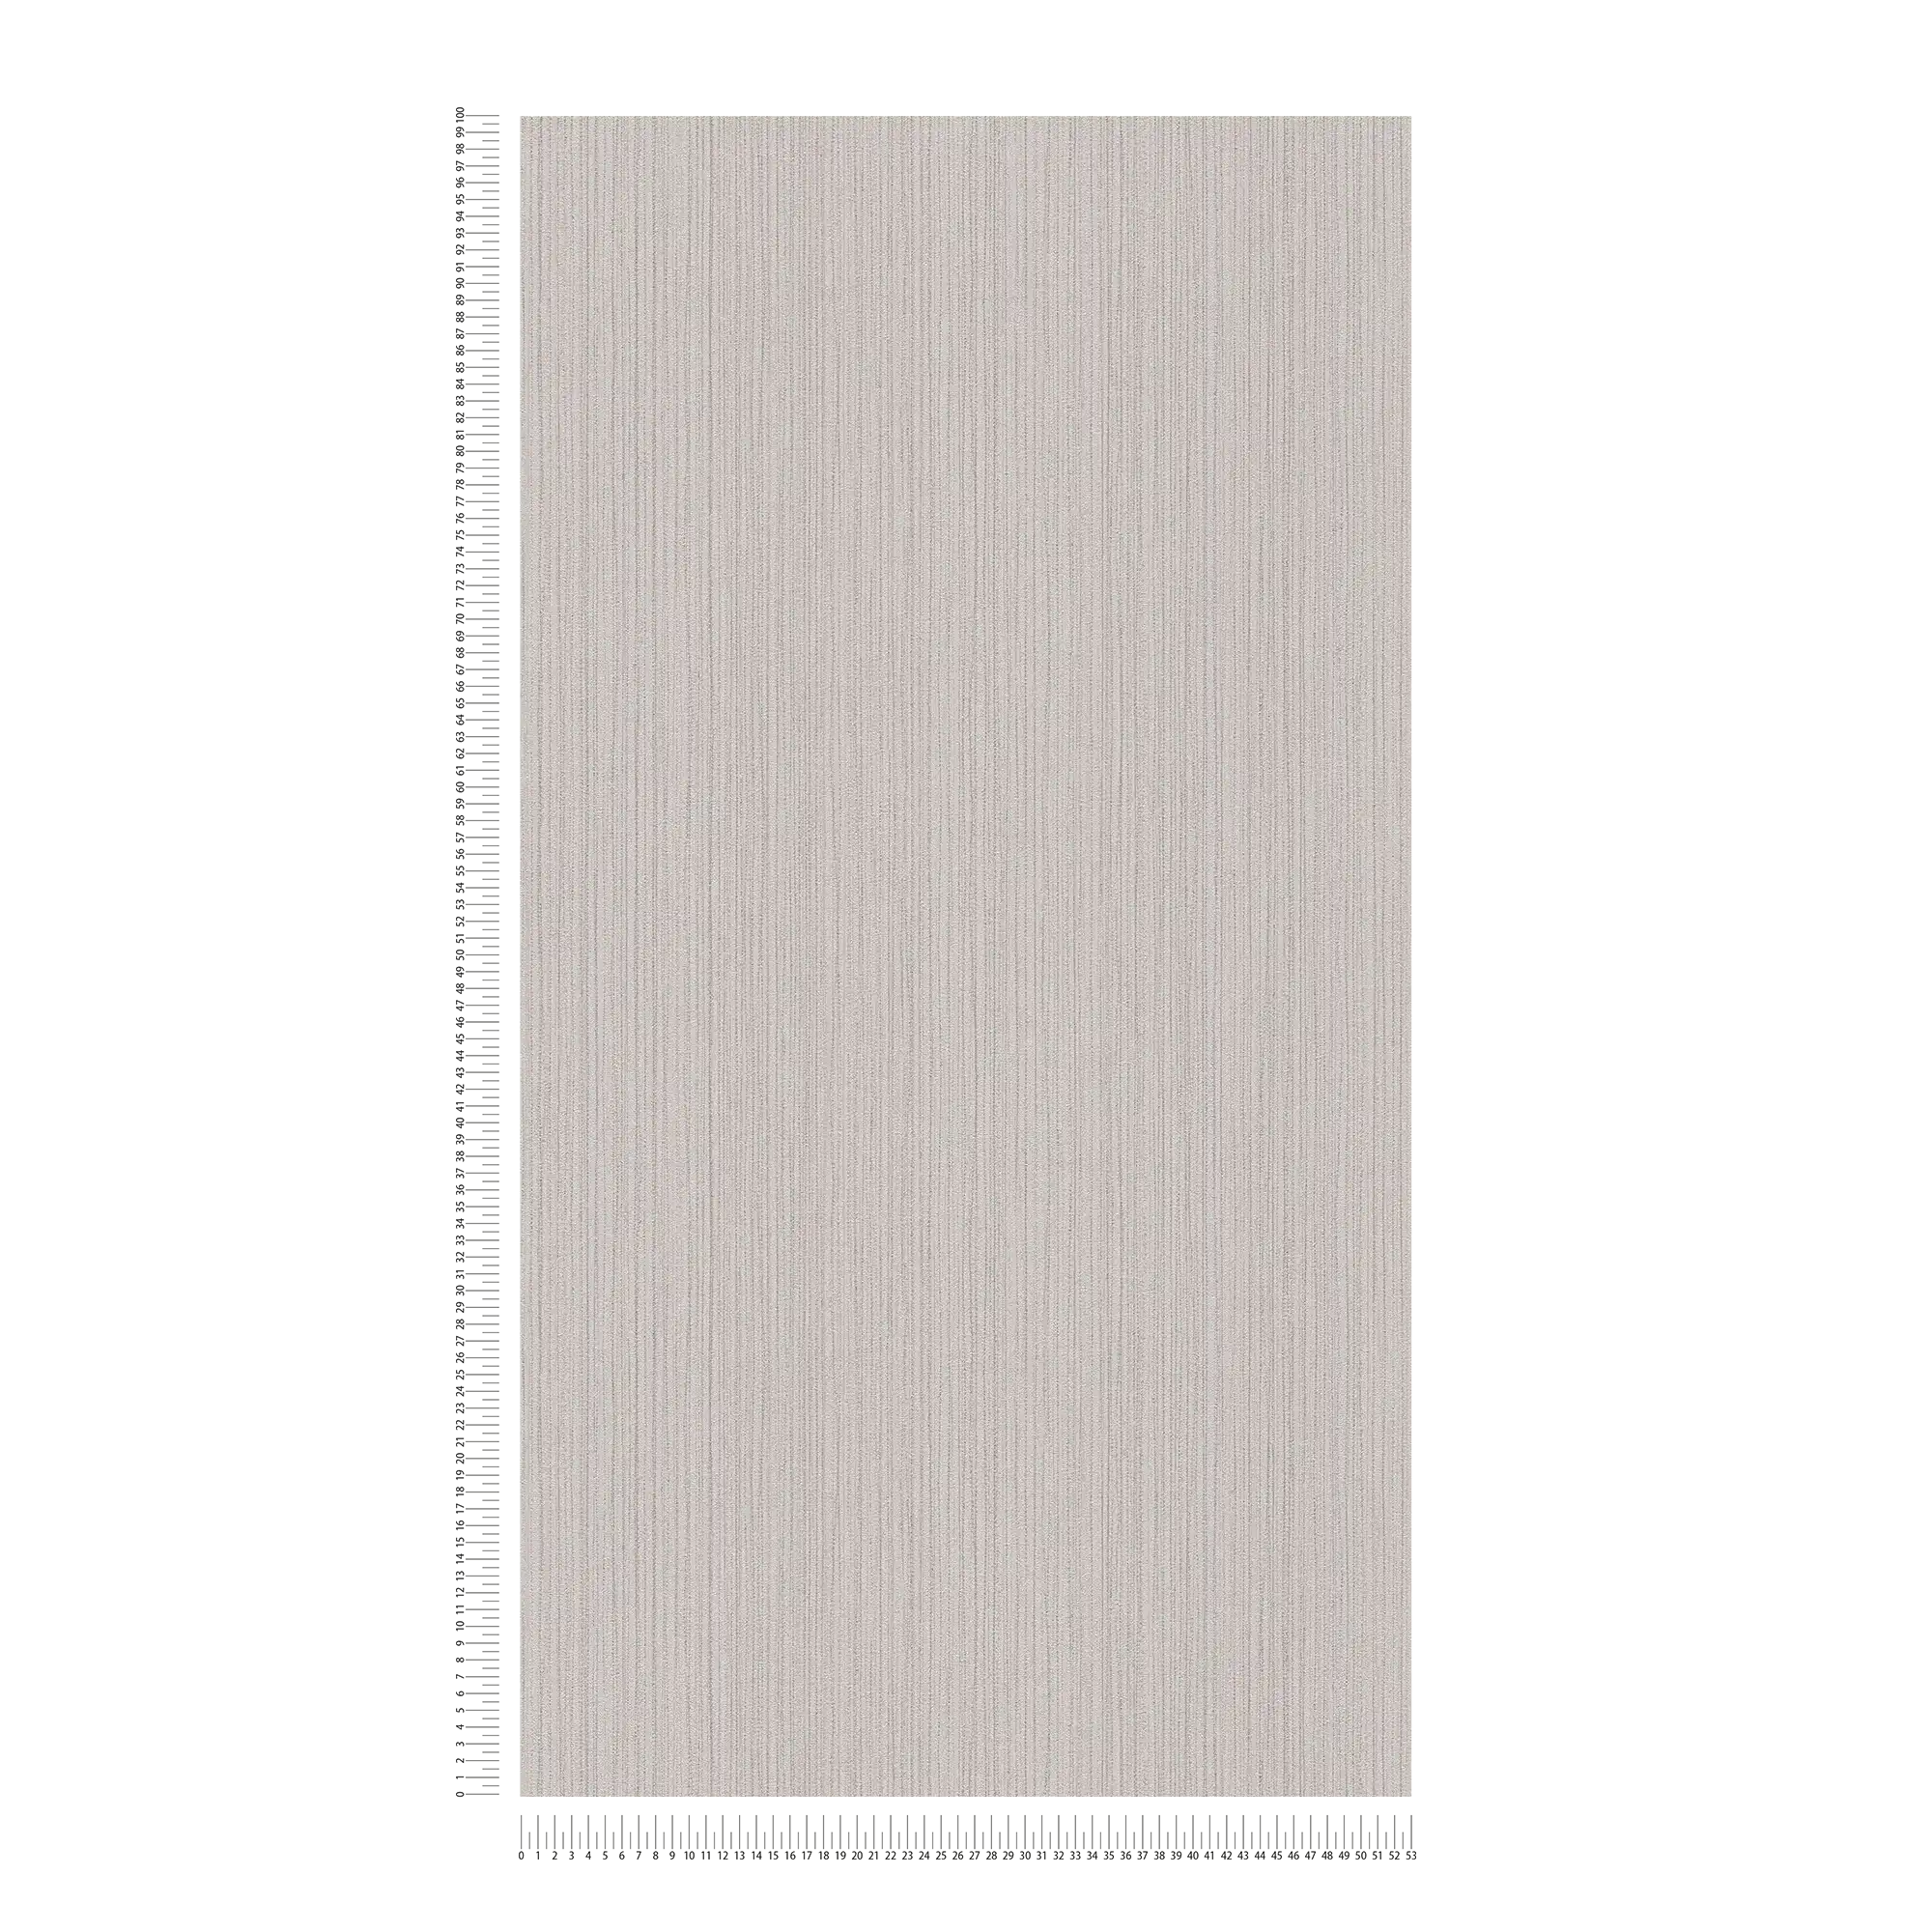             Greige wallpaper metallic luster and line pattern - grey
        